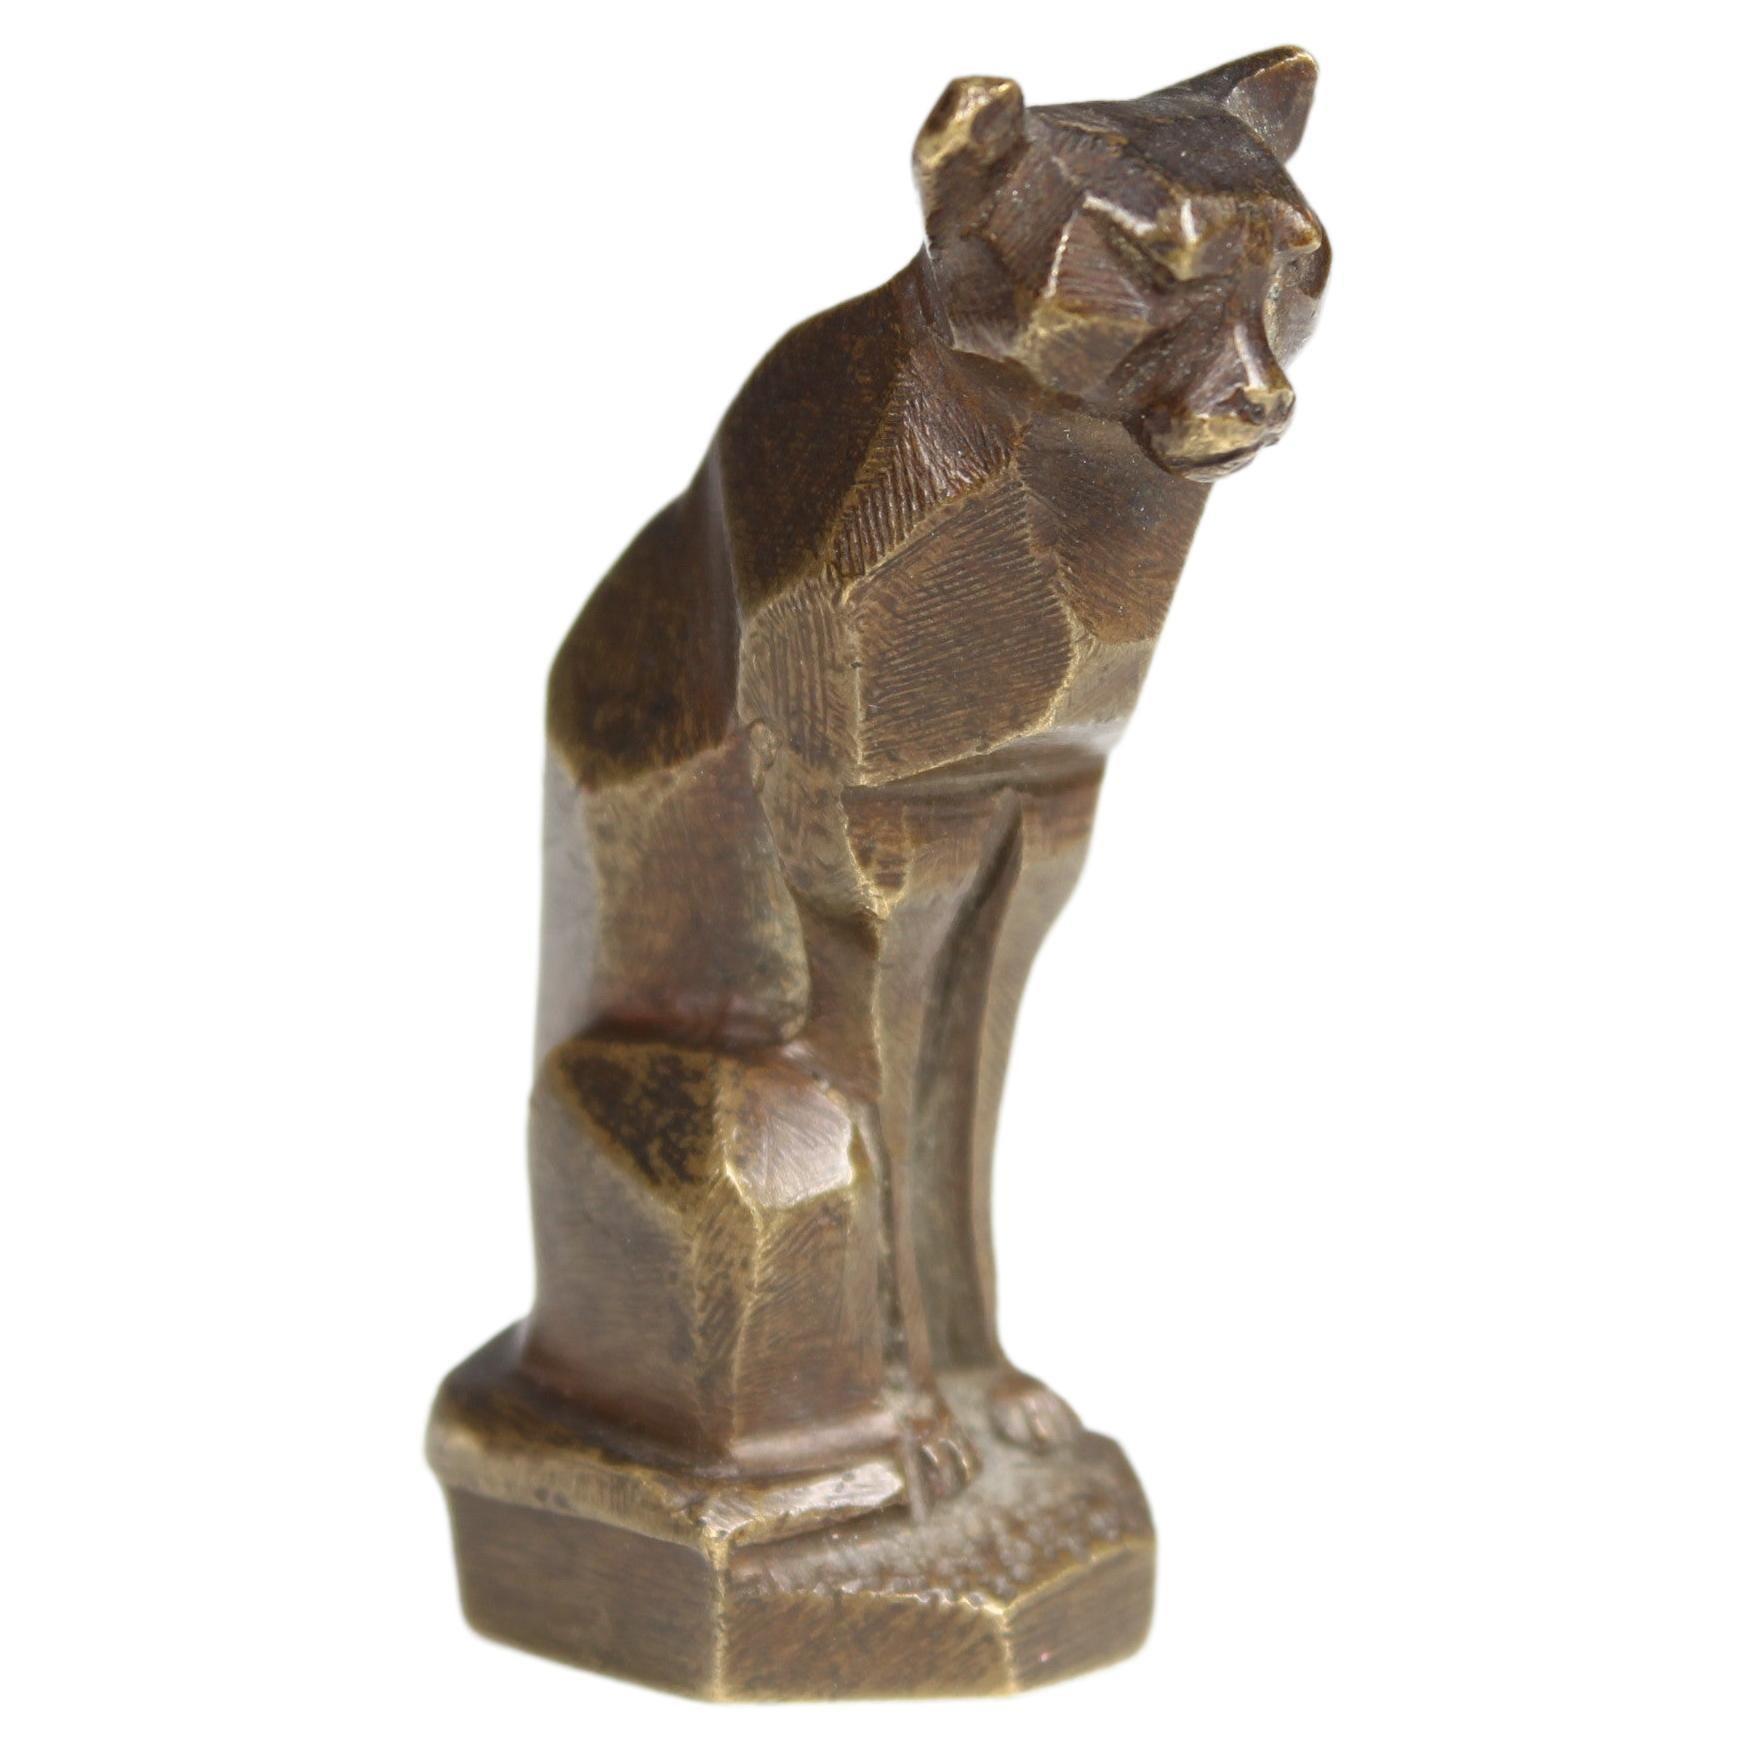 Honey Gold Pouncing Cougar Sculpture